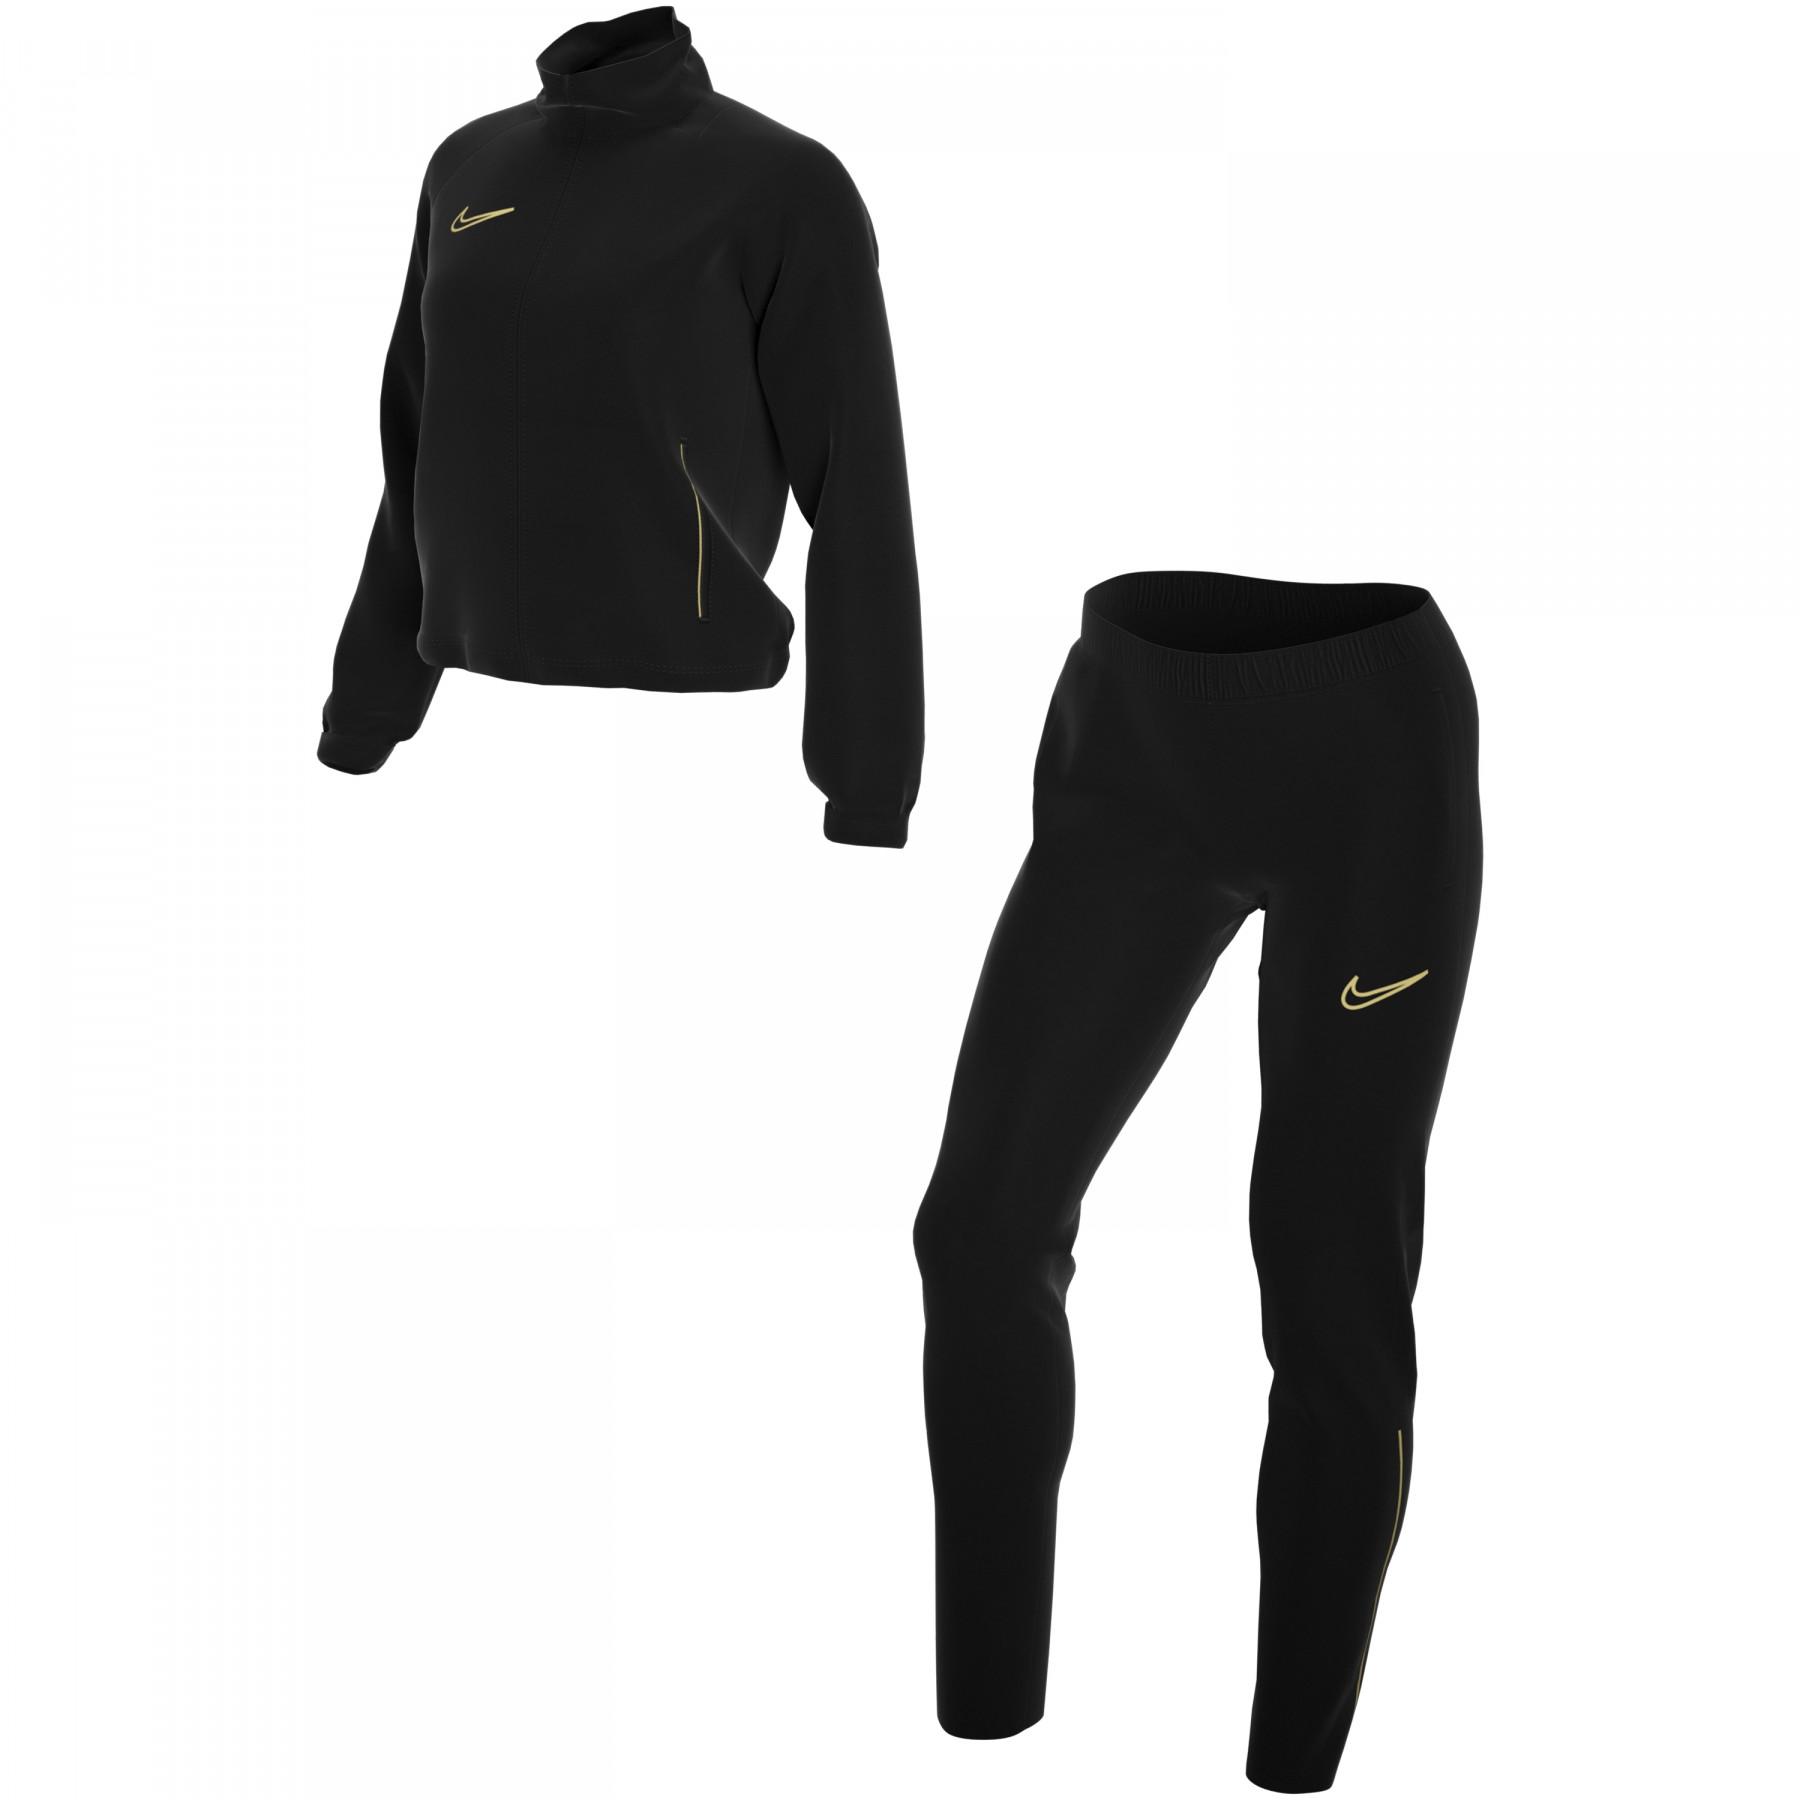 Damen-Trainingsanzug Nike W Nike Dynamic Fit ACD21